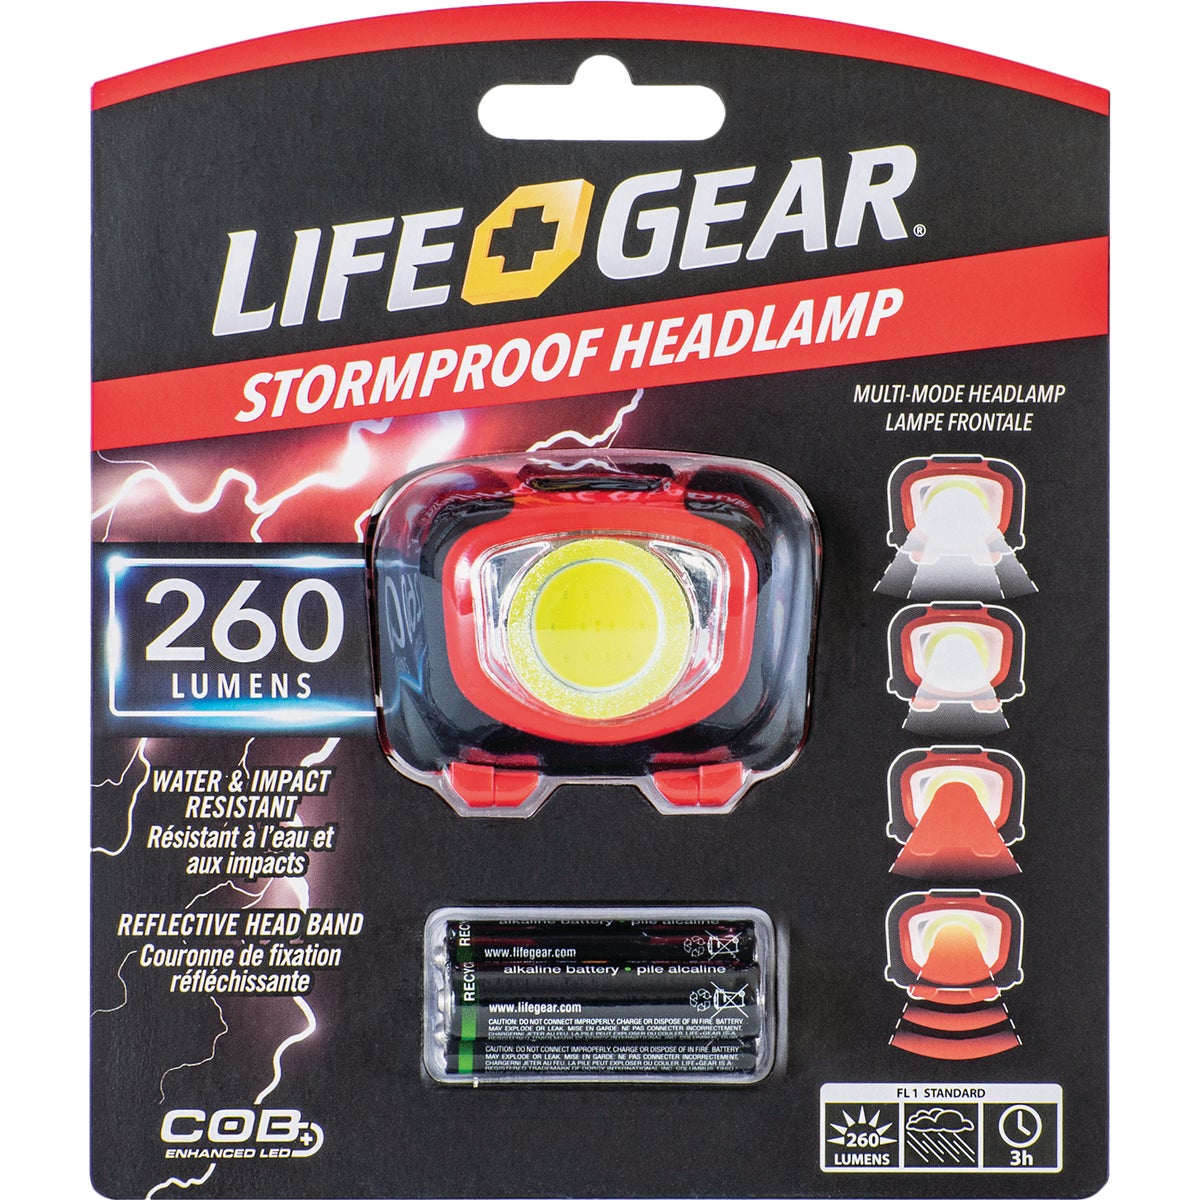 Life Gear Storm Proof 260 Lm. LED 3AAA Headlamp